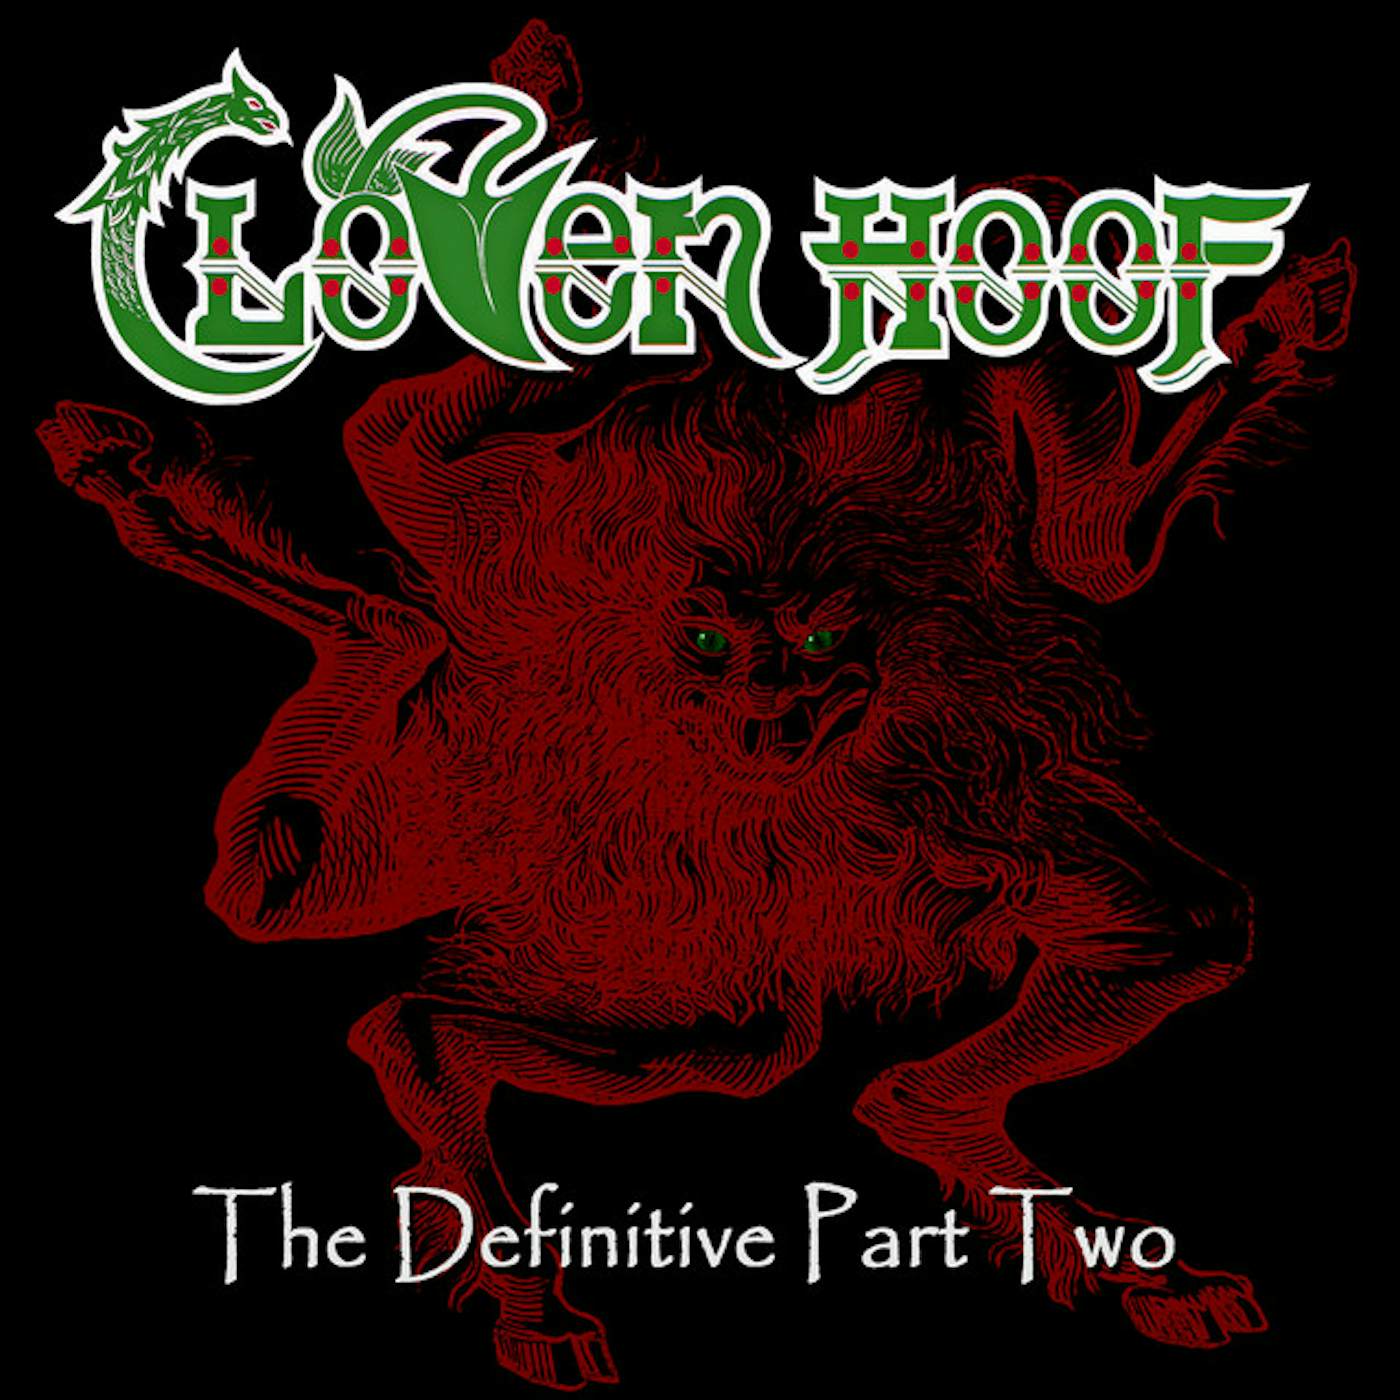 Cloven Hoof DEFINITIVE PART TWO (OXBLOOD VINYL) Vinyl Record